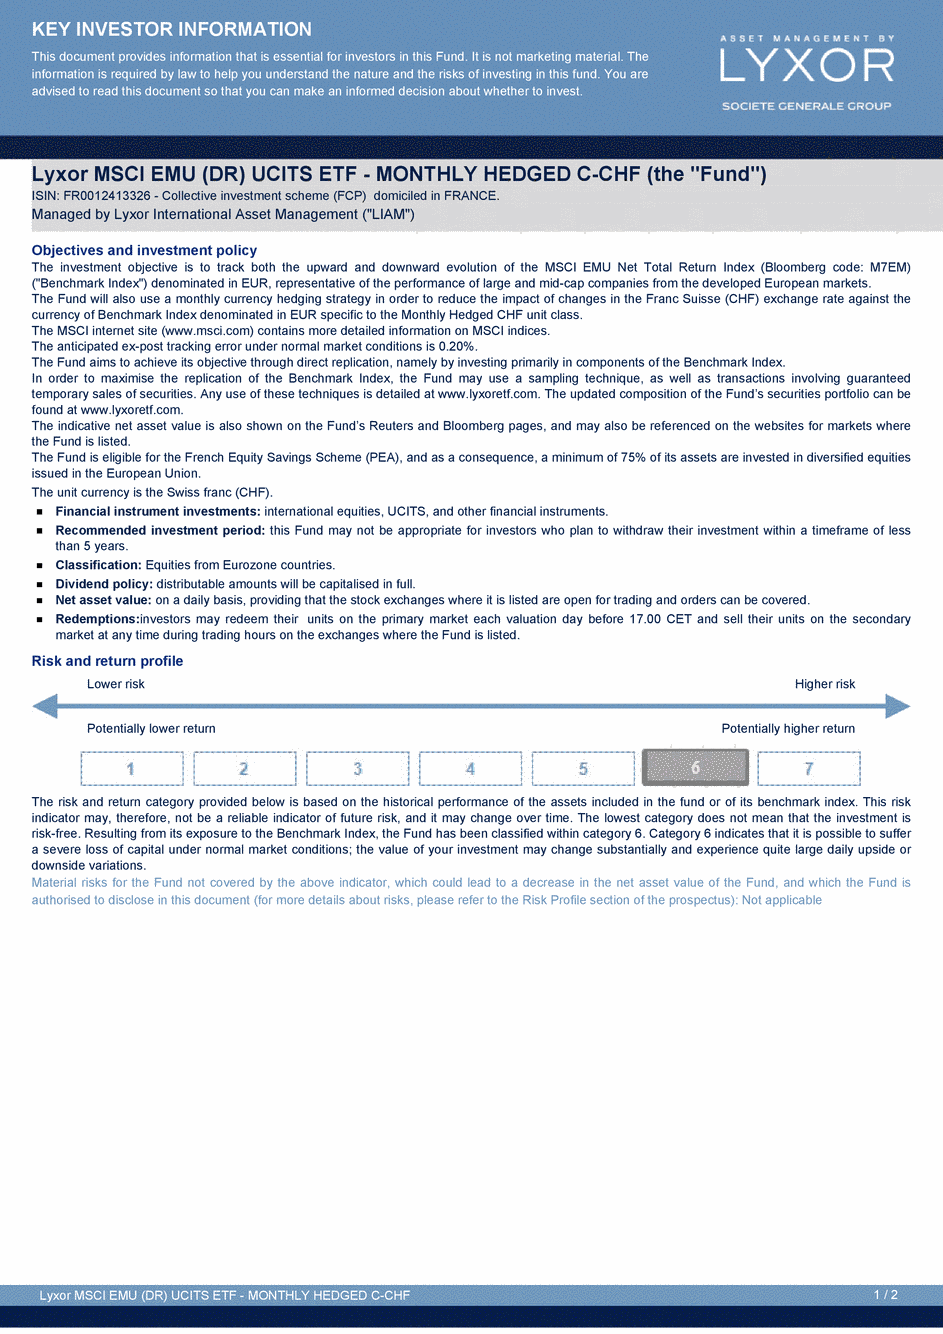 DICI LYXOR MSCI EMU UCITS ETF Daily Hedged C-CHF - 17/12/2015 - Anglais